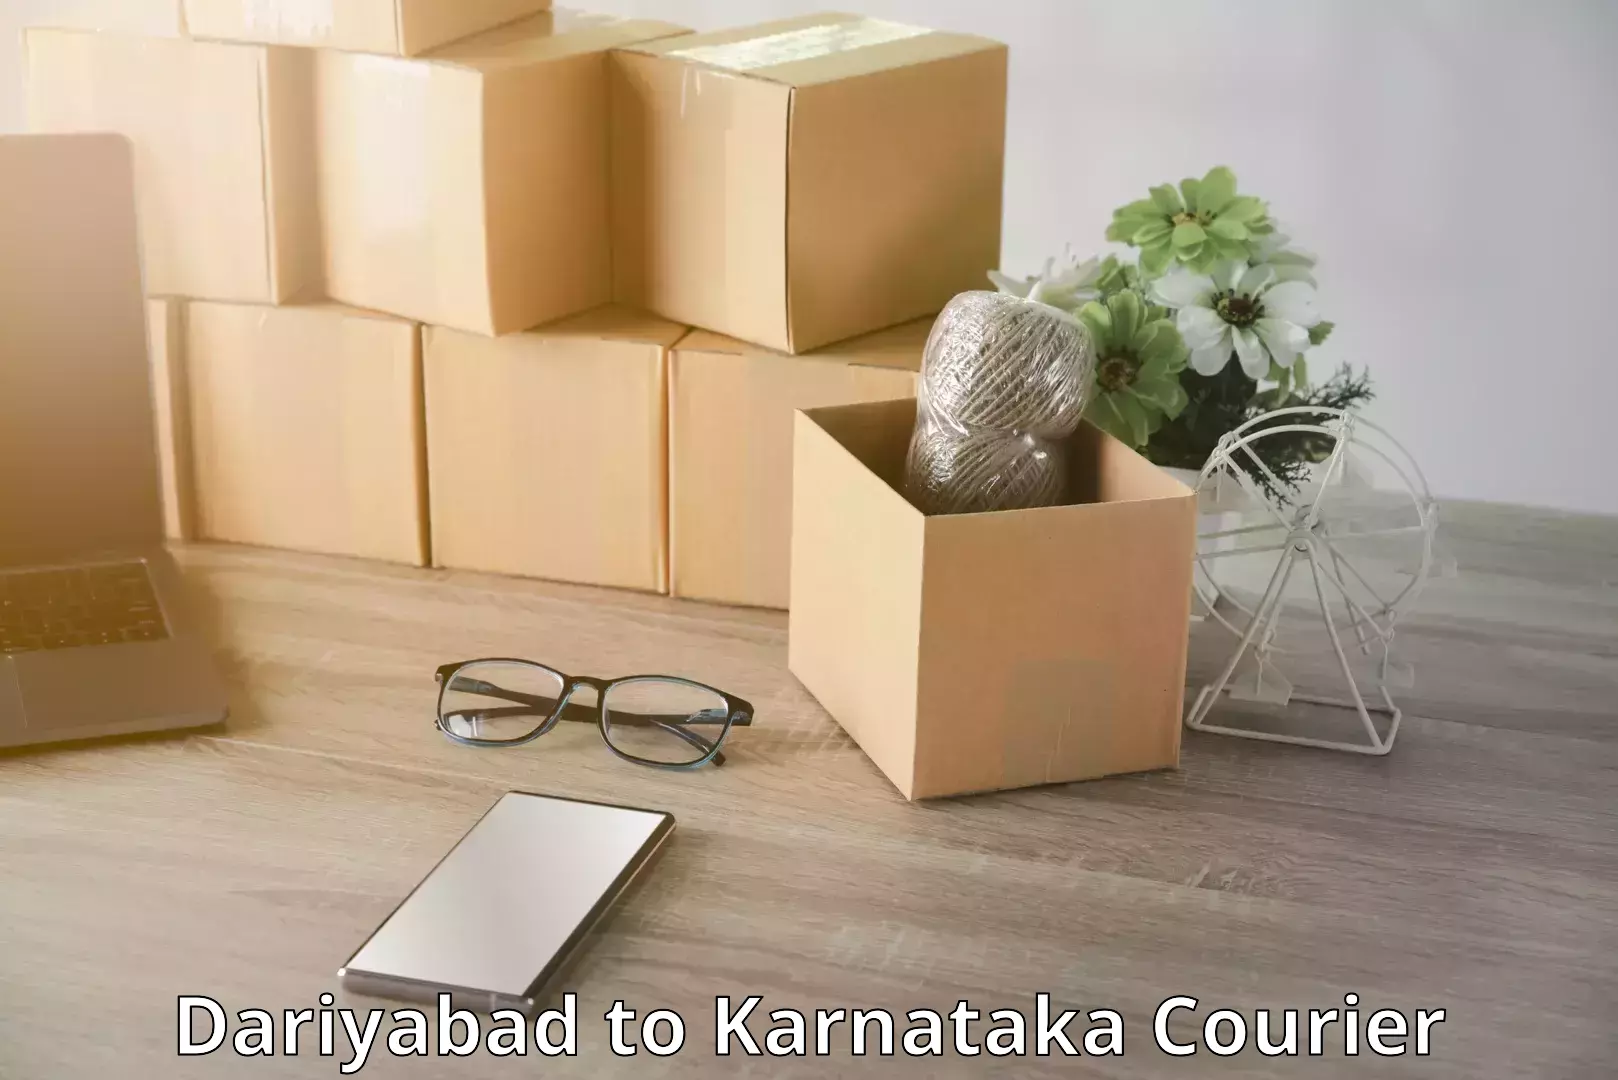 Emergency baggage service Dariyabad to Karnataka